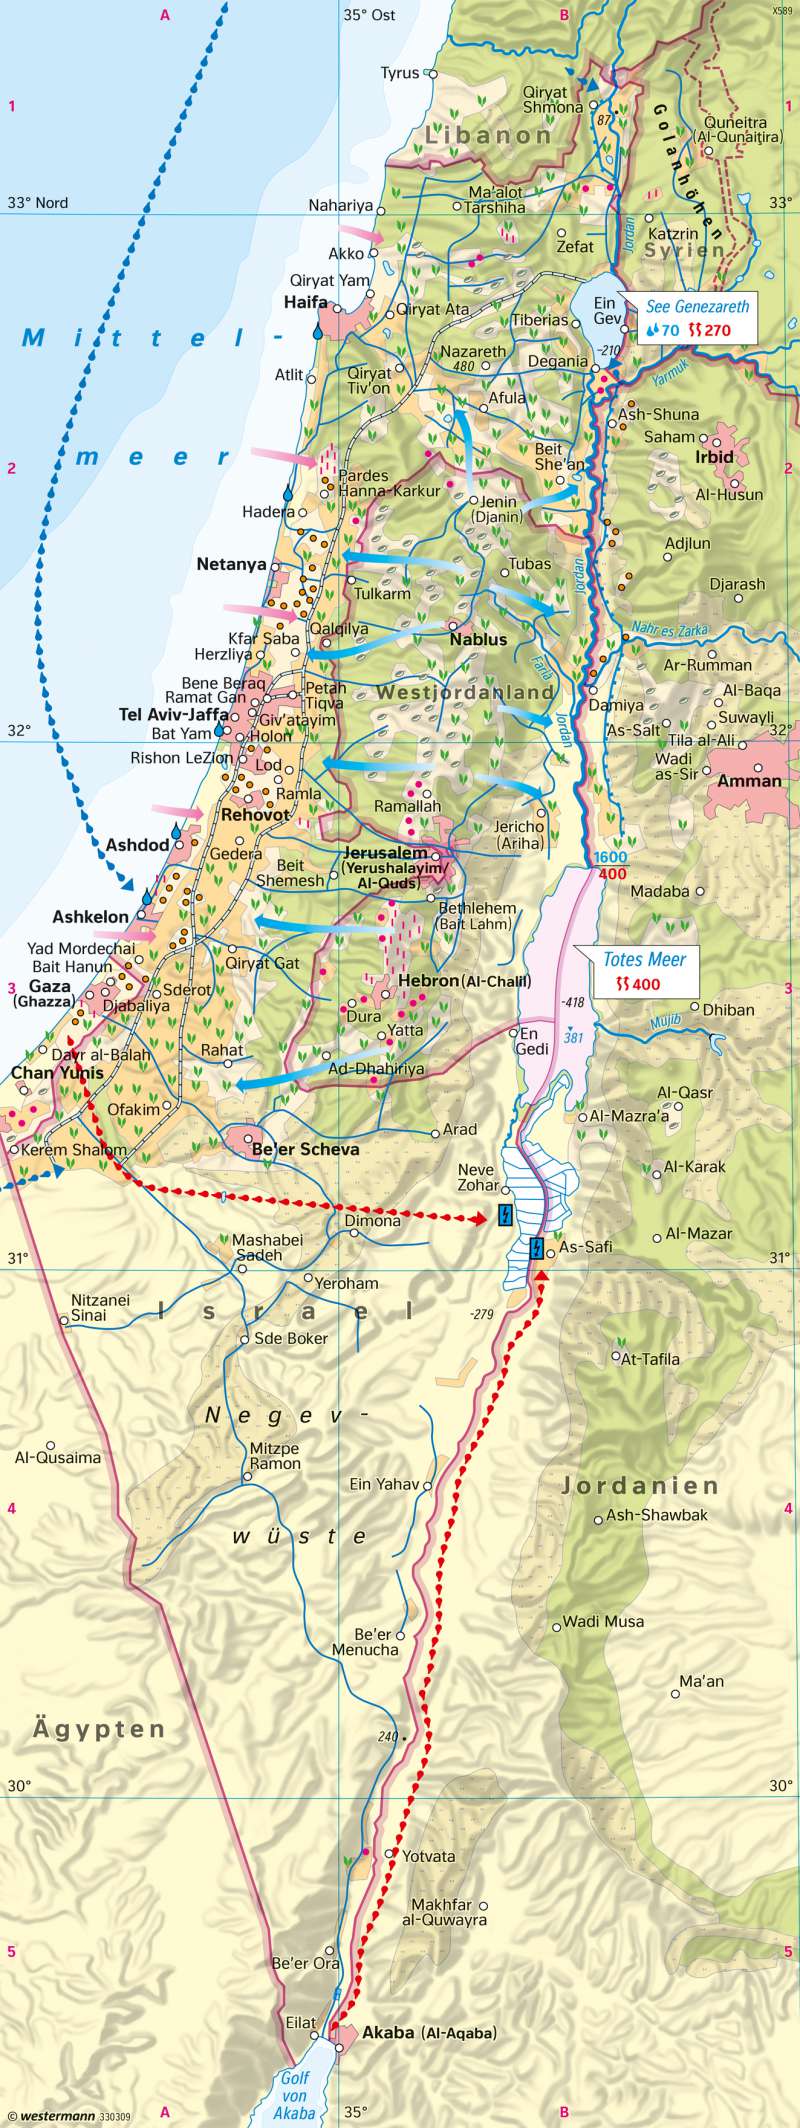 Diercke Weltatlas Kartenansicht Israel Palastina Lebensgrundlage Wasser 978 3 14 8 176 2 1